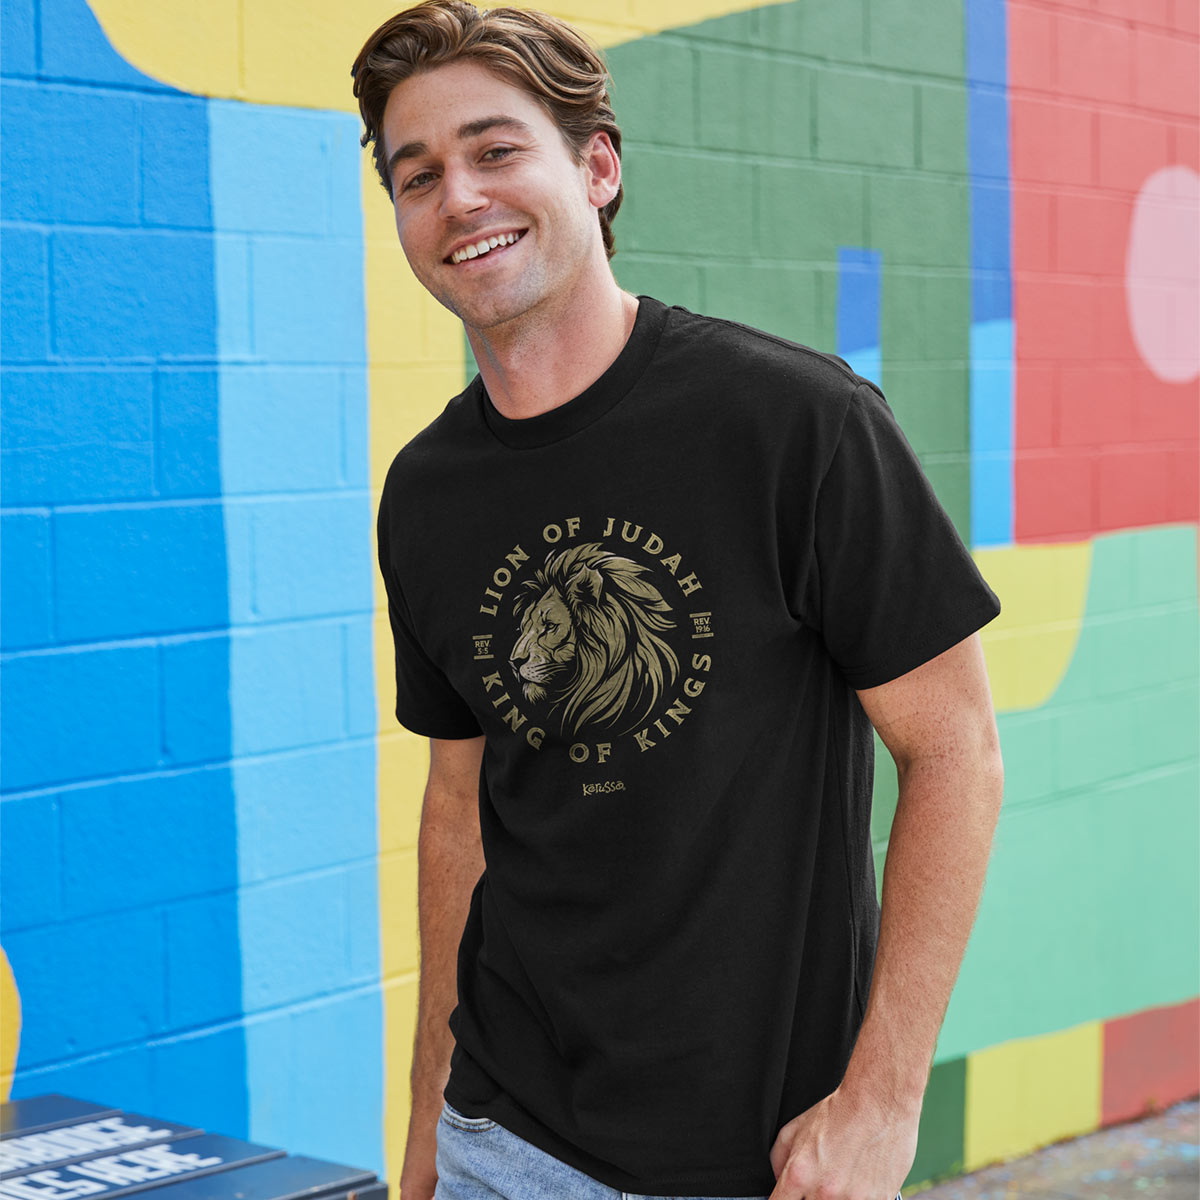 Kerusso Christian T-Shirt Lion Of Judah | GodBuiltClothing.com